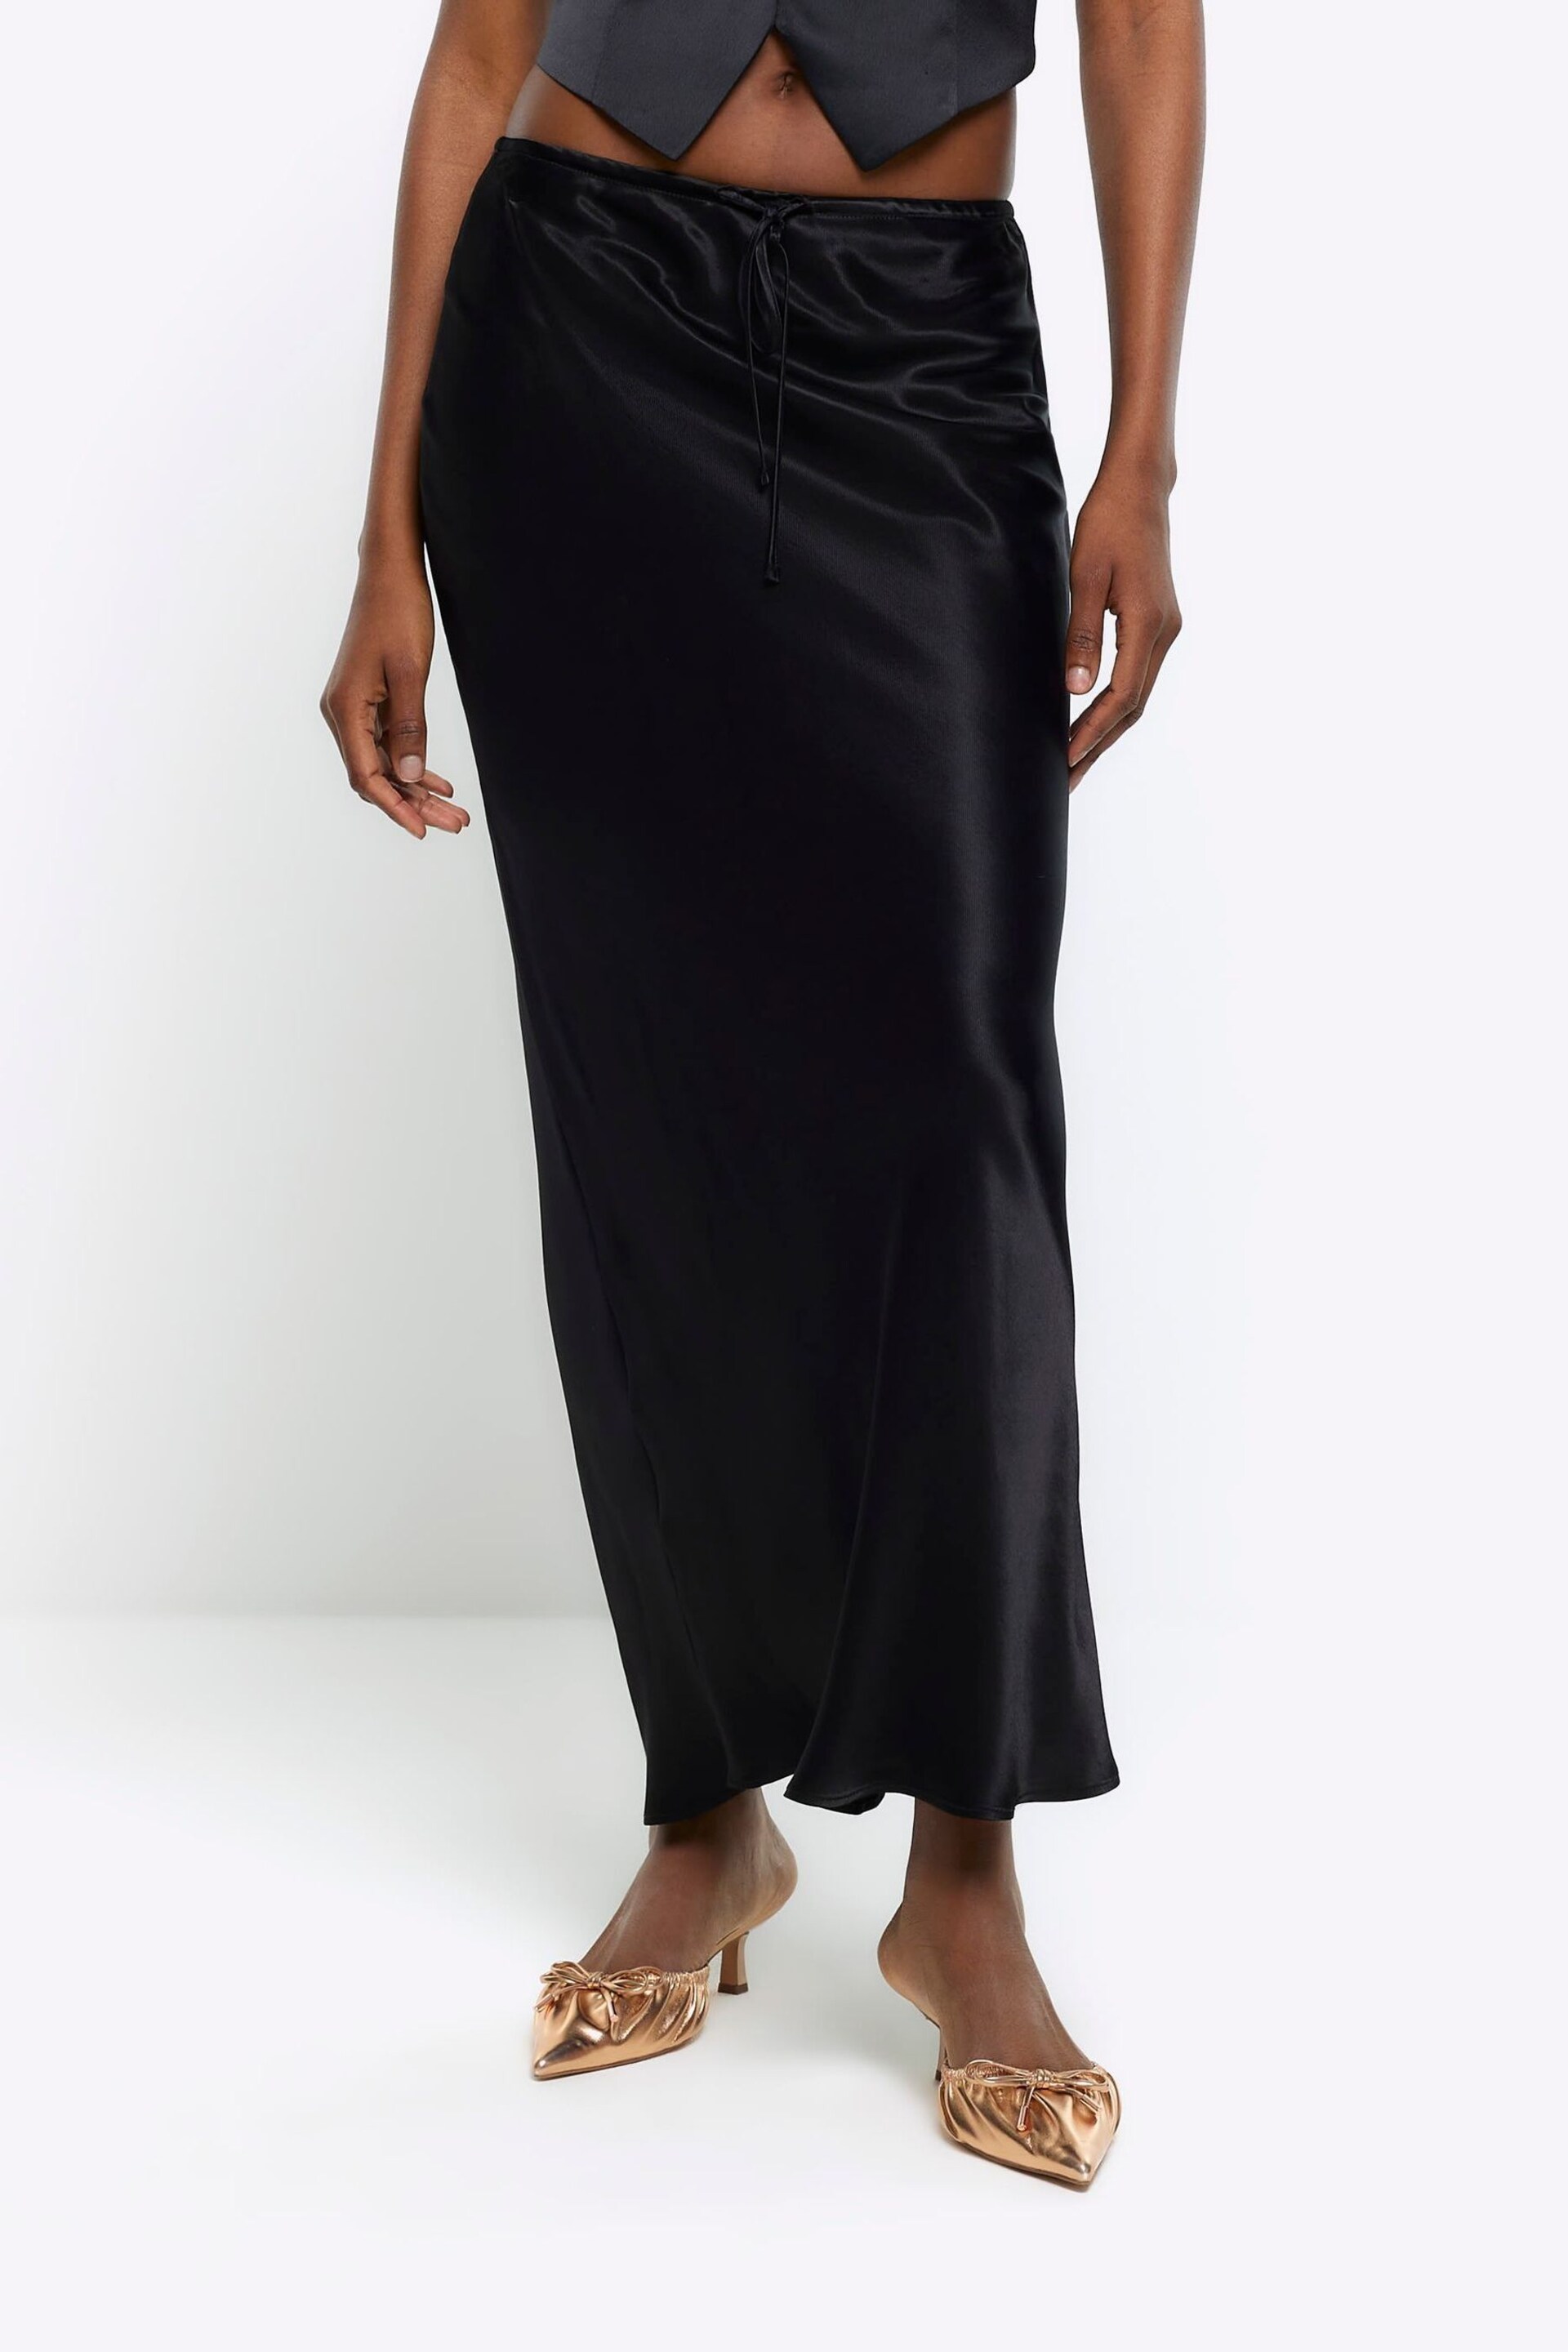 River Island Black Tie Waist Bias Skirt - Image 1 of 4